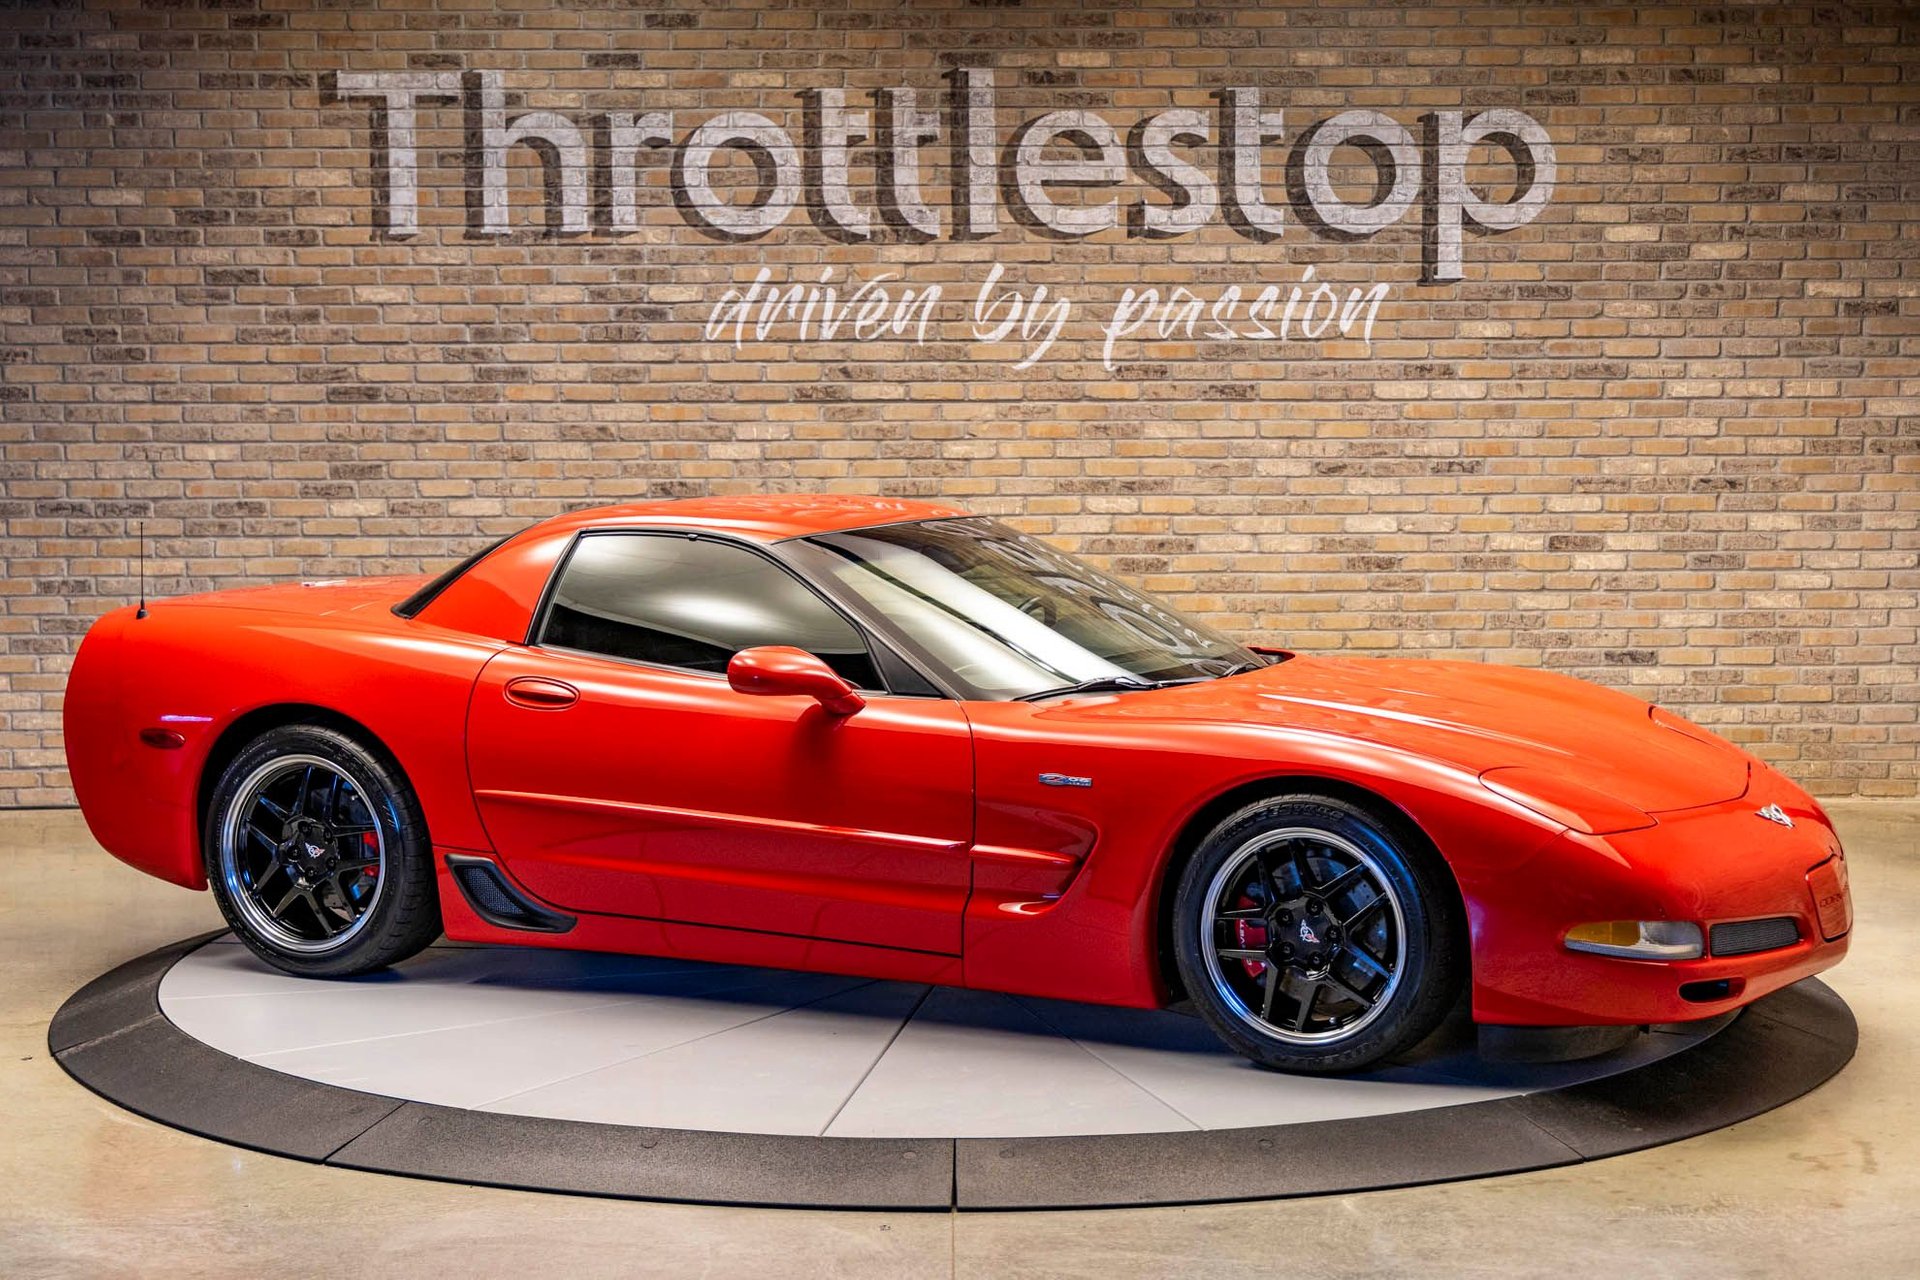 813456 | 2003 Chevrolet Corvette Z06 | Throttlestop | Automotive and Motorcycle Consignment Dealer